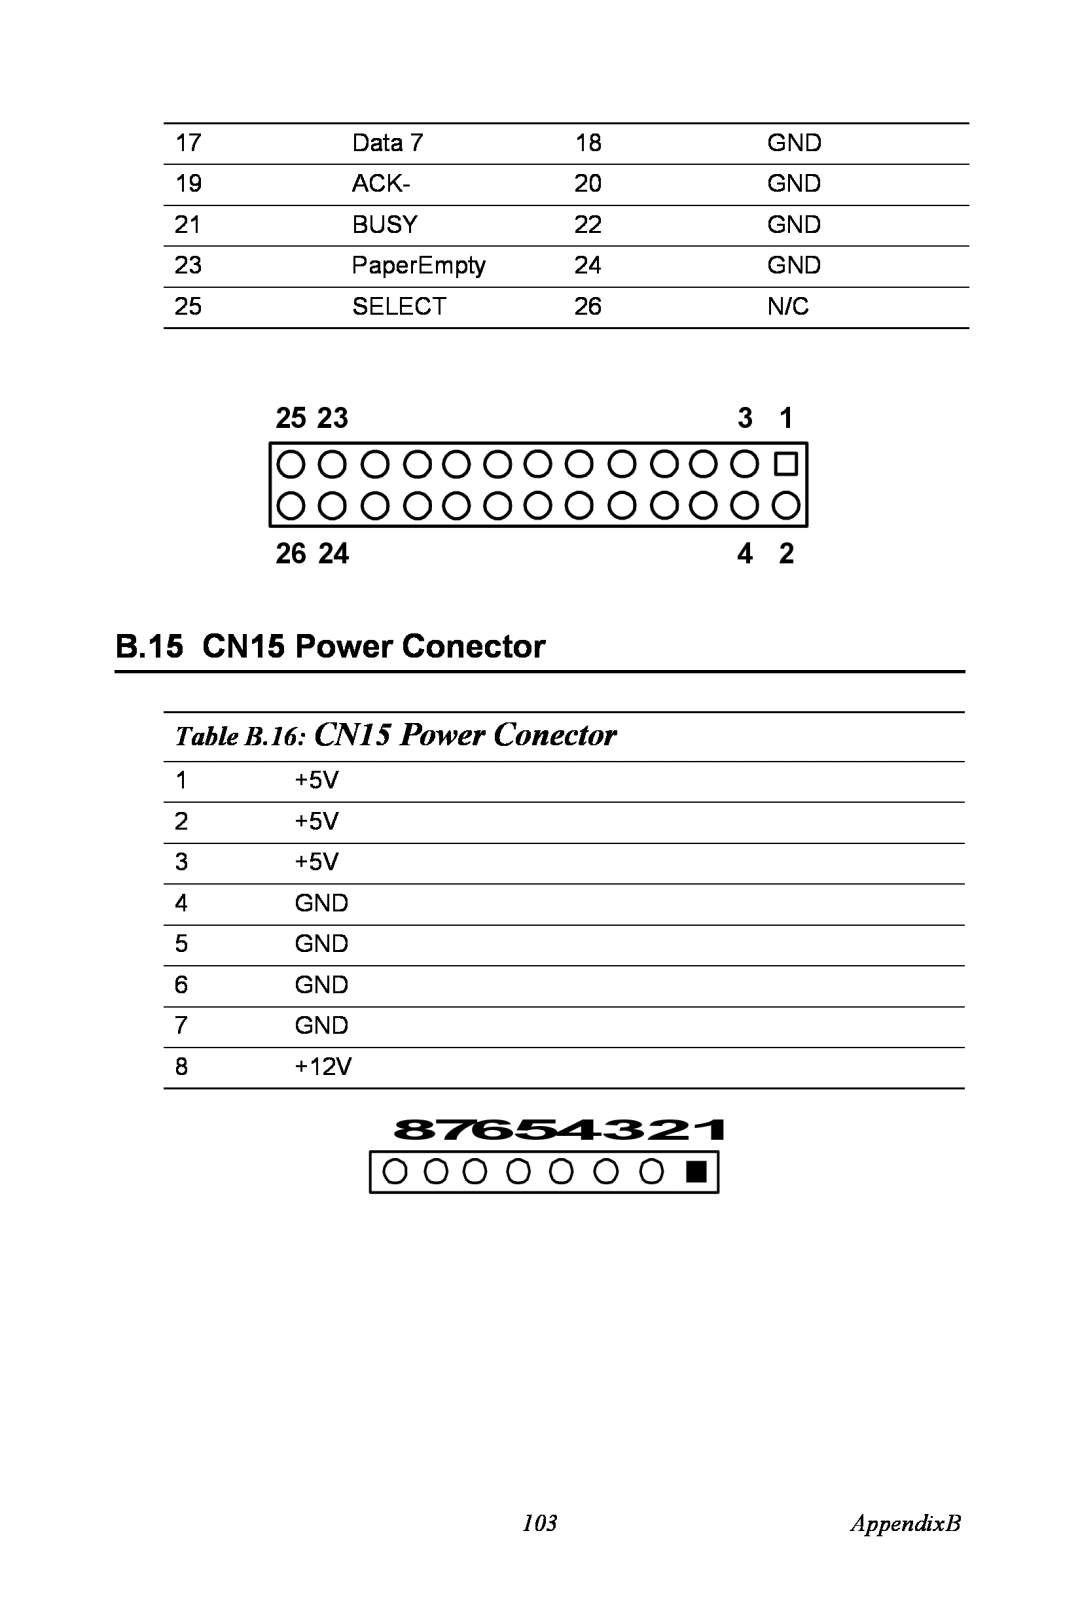 Intel PCM-3370 user manual B.15 CN15 Power Conector, Table B.16 CN15 Power Conector, 87654321, AppendixB 